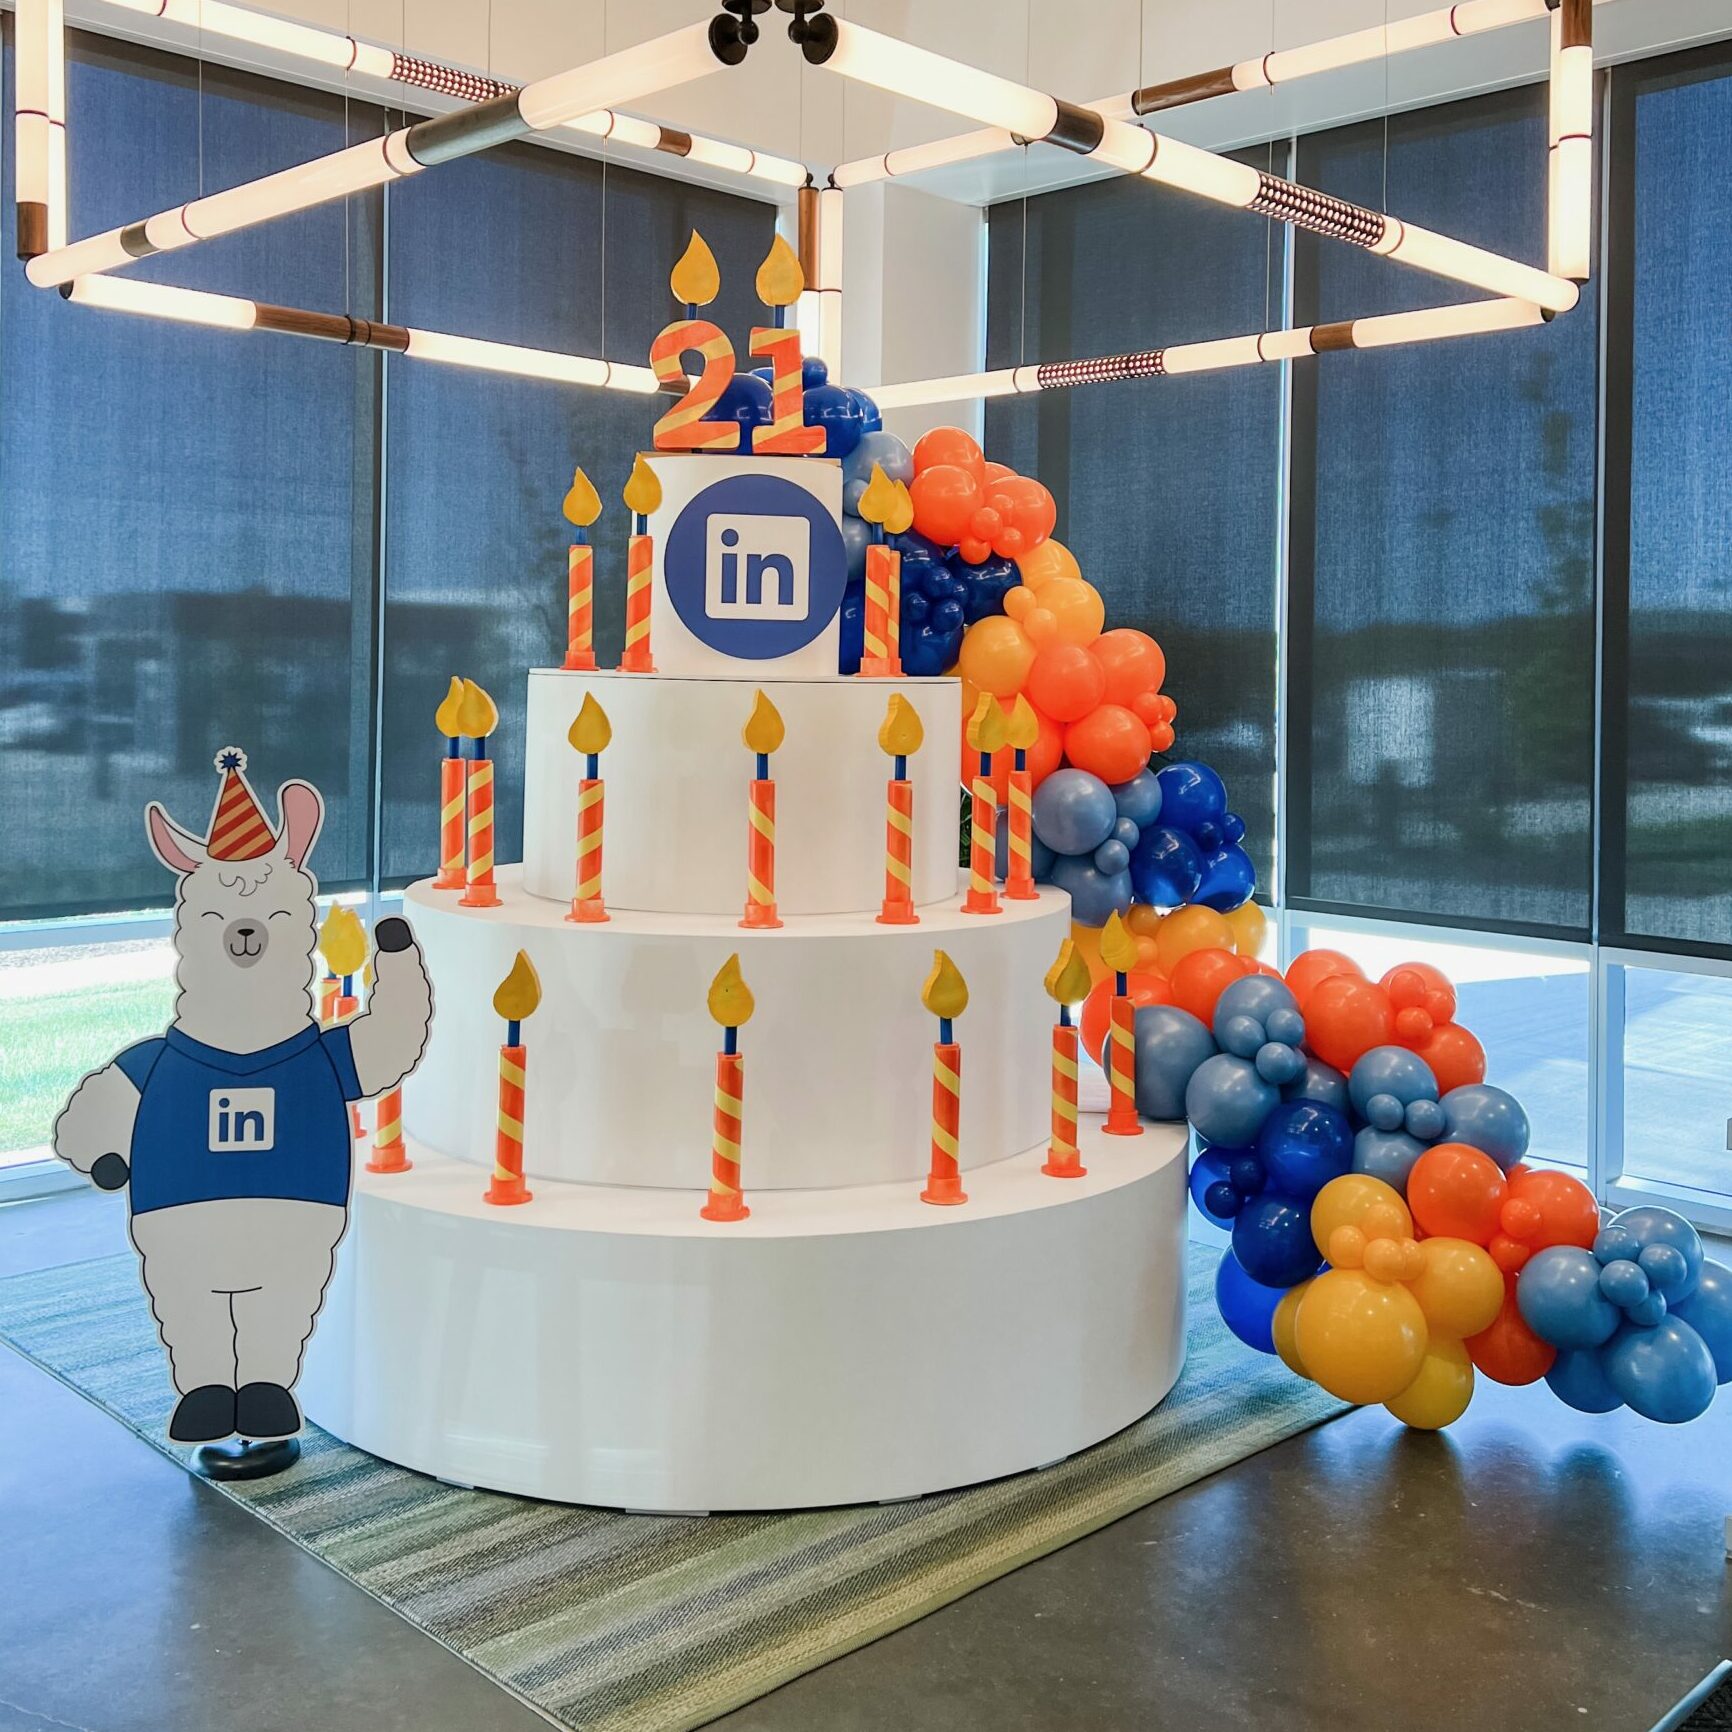 Custom 10ft H Wooden Birthday Cake with Candles & Branding for LinkedIn's 21st Birthday